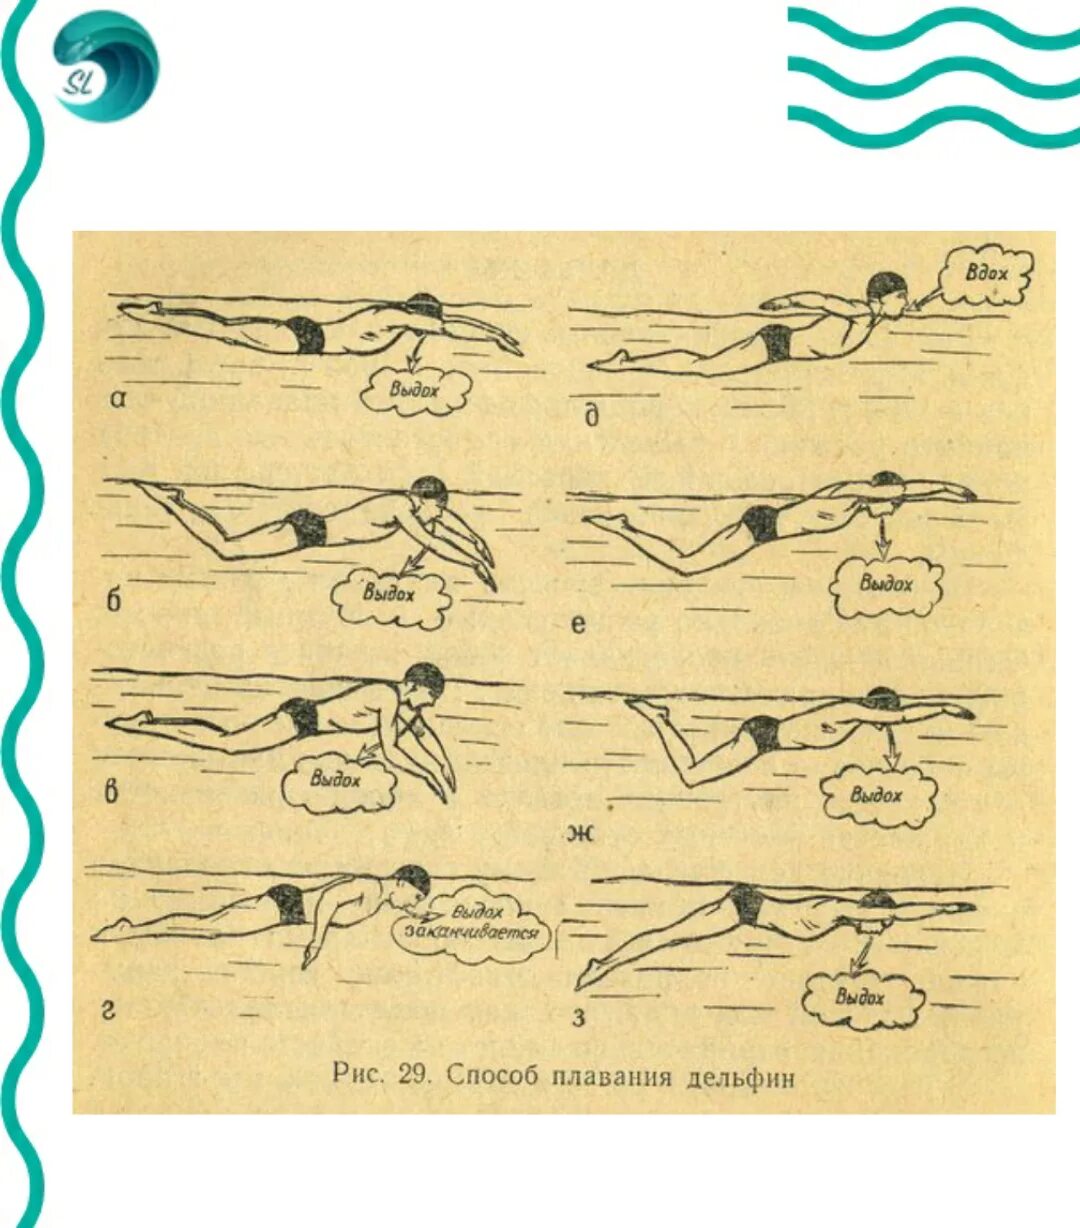 Техники плавания Баттерфляй. Стиль плавания Баттерфляй техника. Техника плавания: стиль Баттерфляй (Дельфин). Техники плавания брасс Кроль Баттерфляй. Где можно научиться плавать